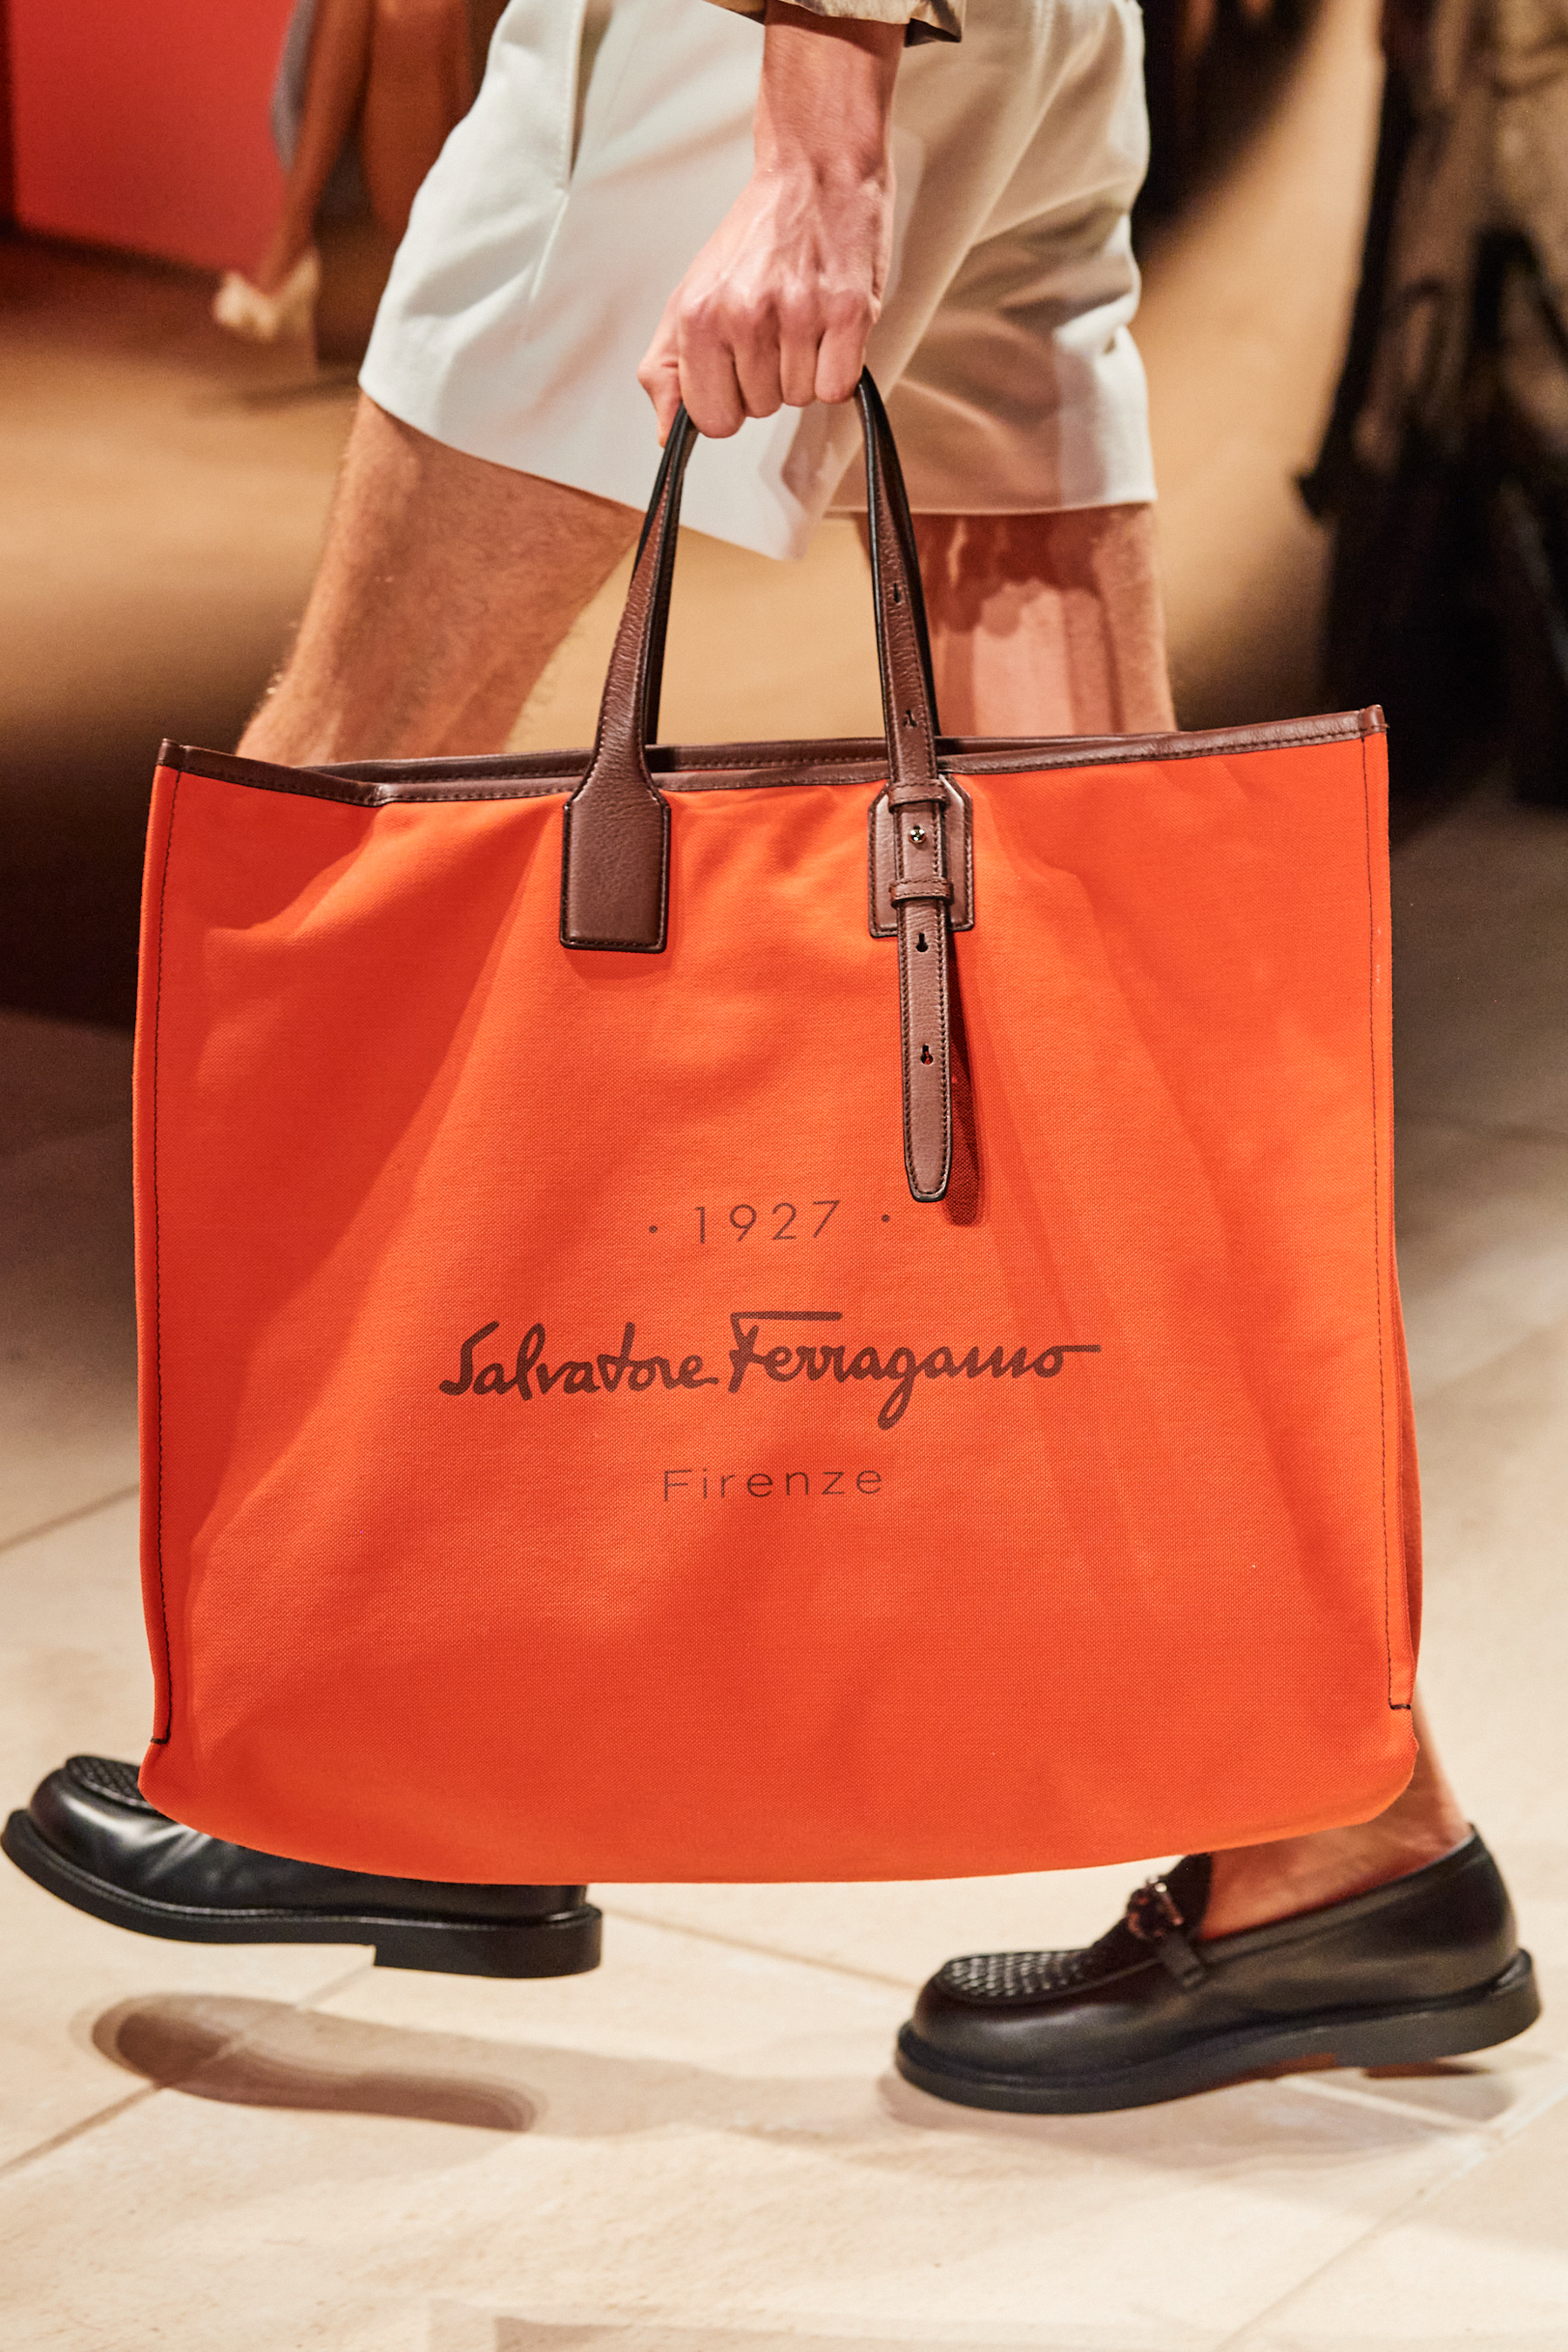 Salvatore Ferragamo Spring 2022 Details Fashion Show